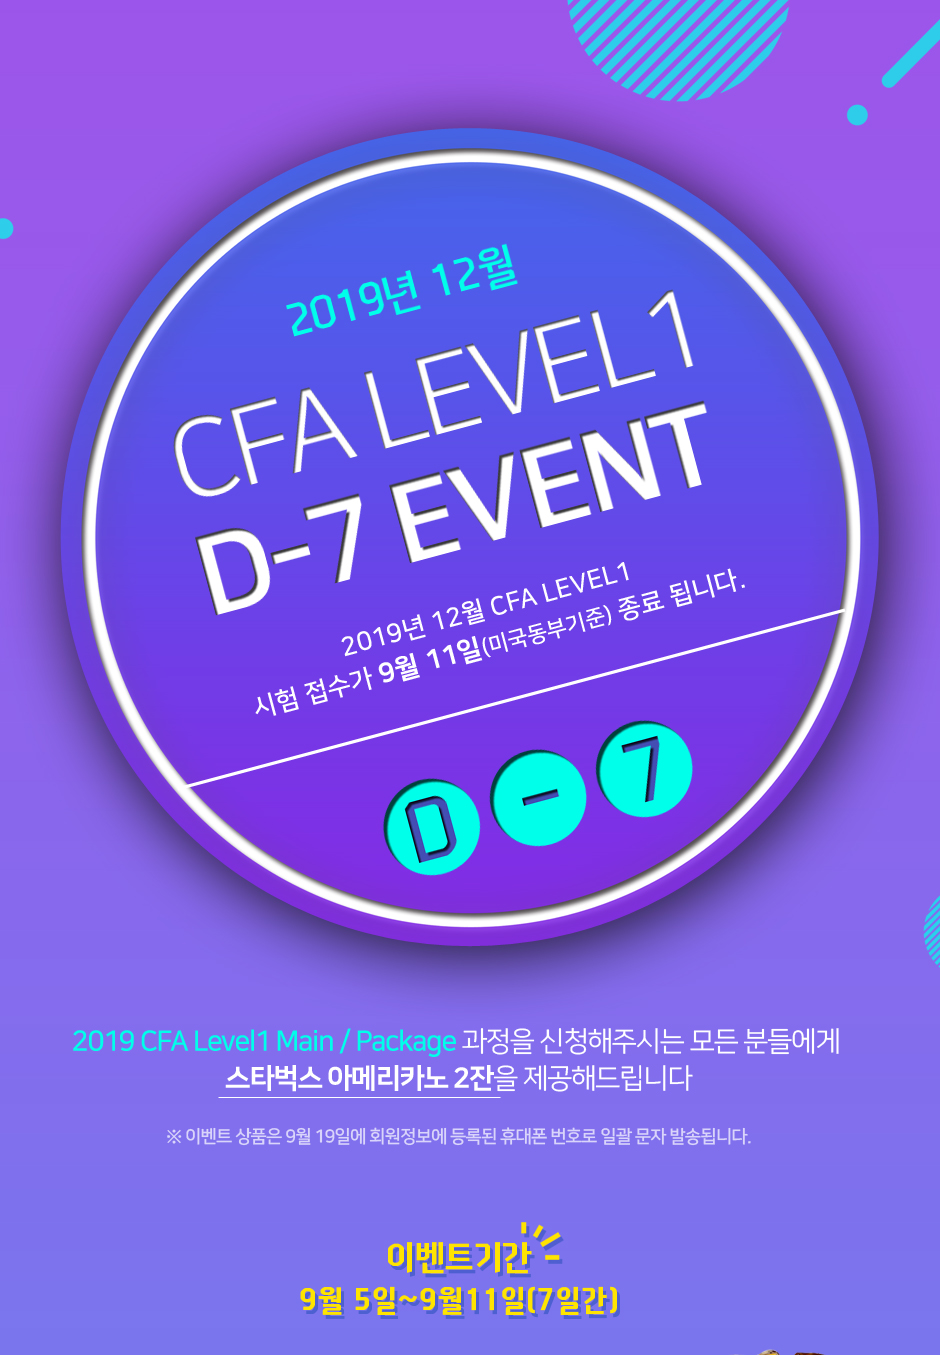 CFA Level 1 D-7 EVENT